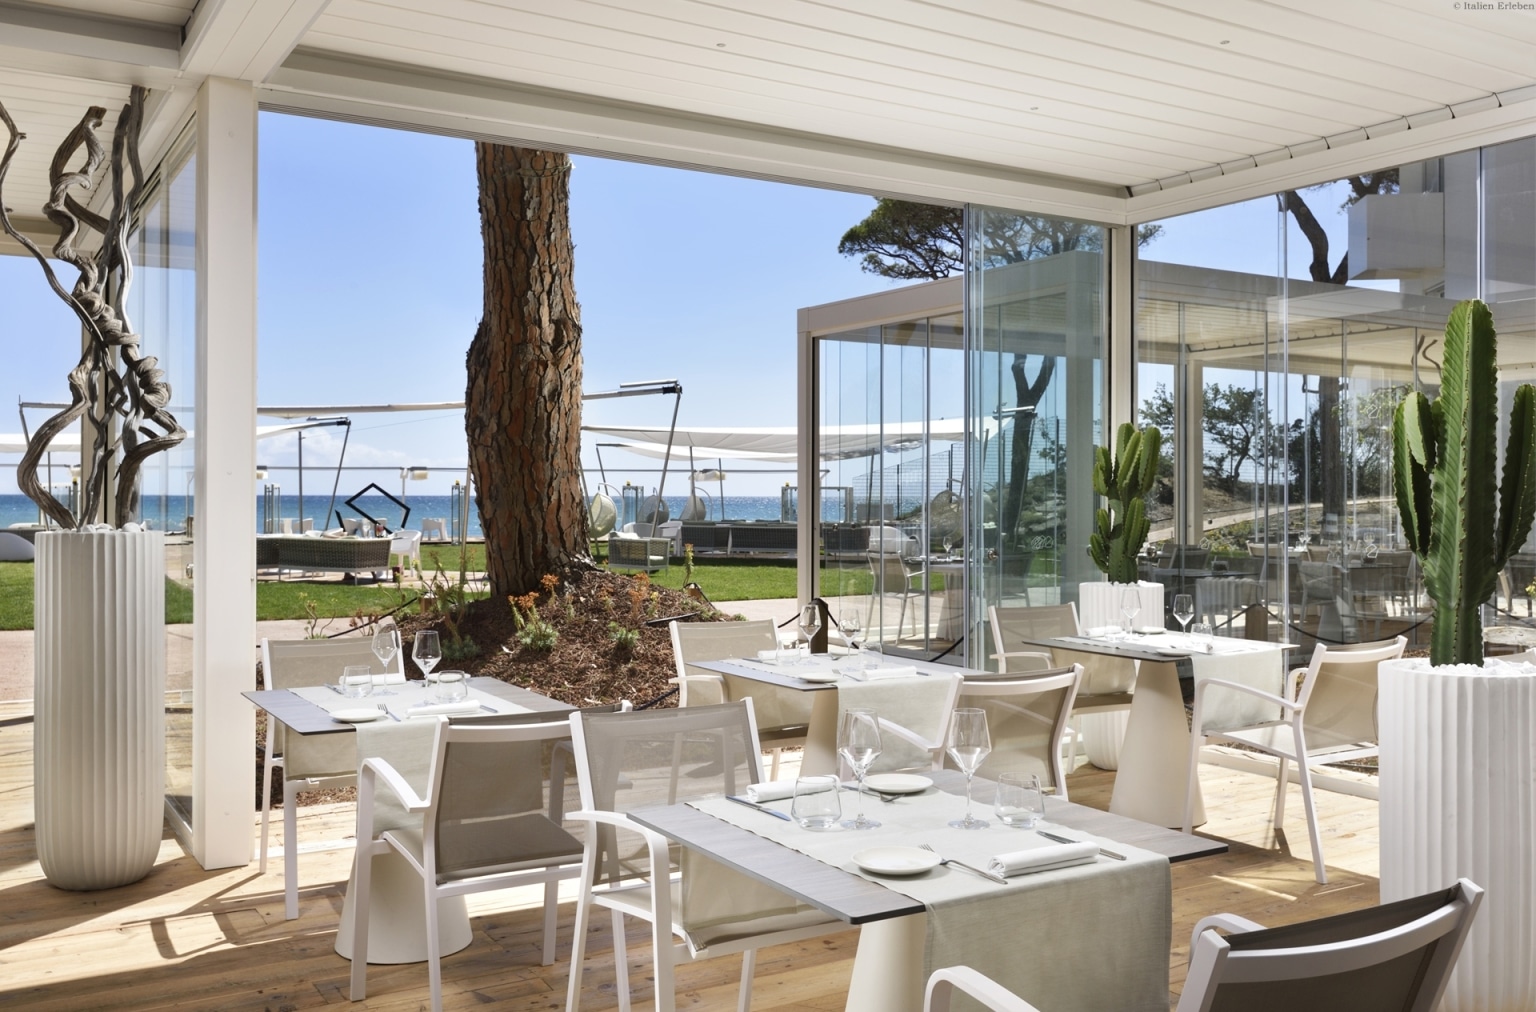 Toskana Hotel The Sense Experience Resort Follonica Maremma direkt Meer Pinien Strand Sand Pool Restaurant